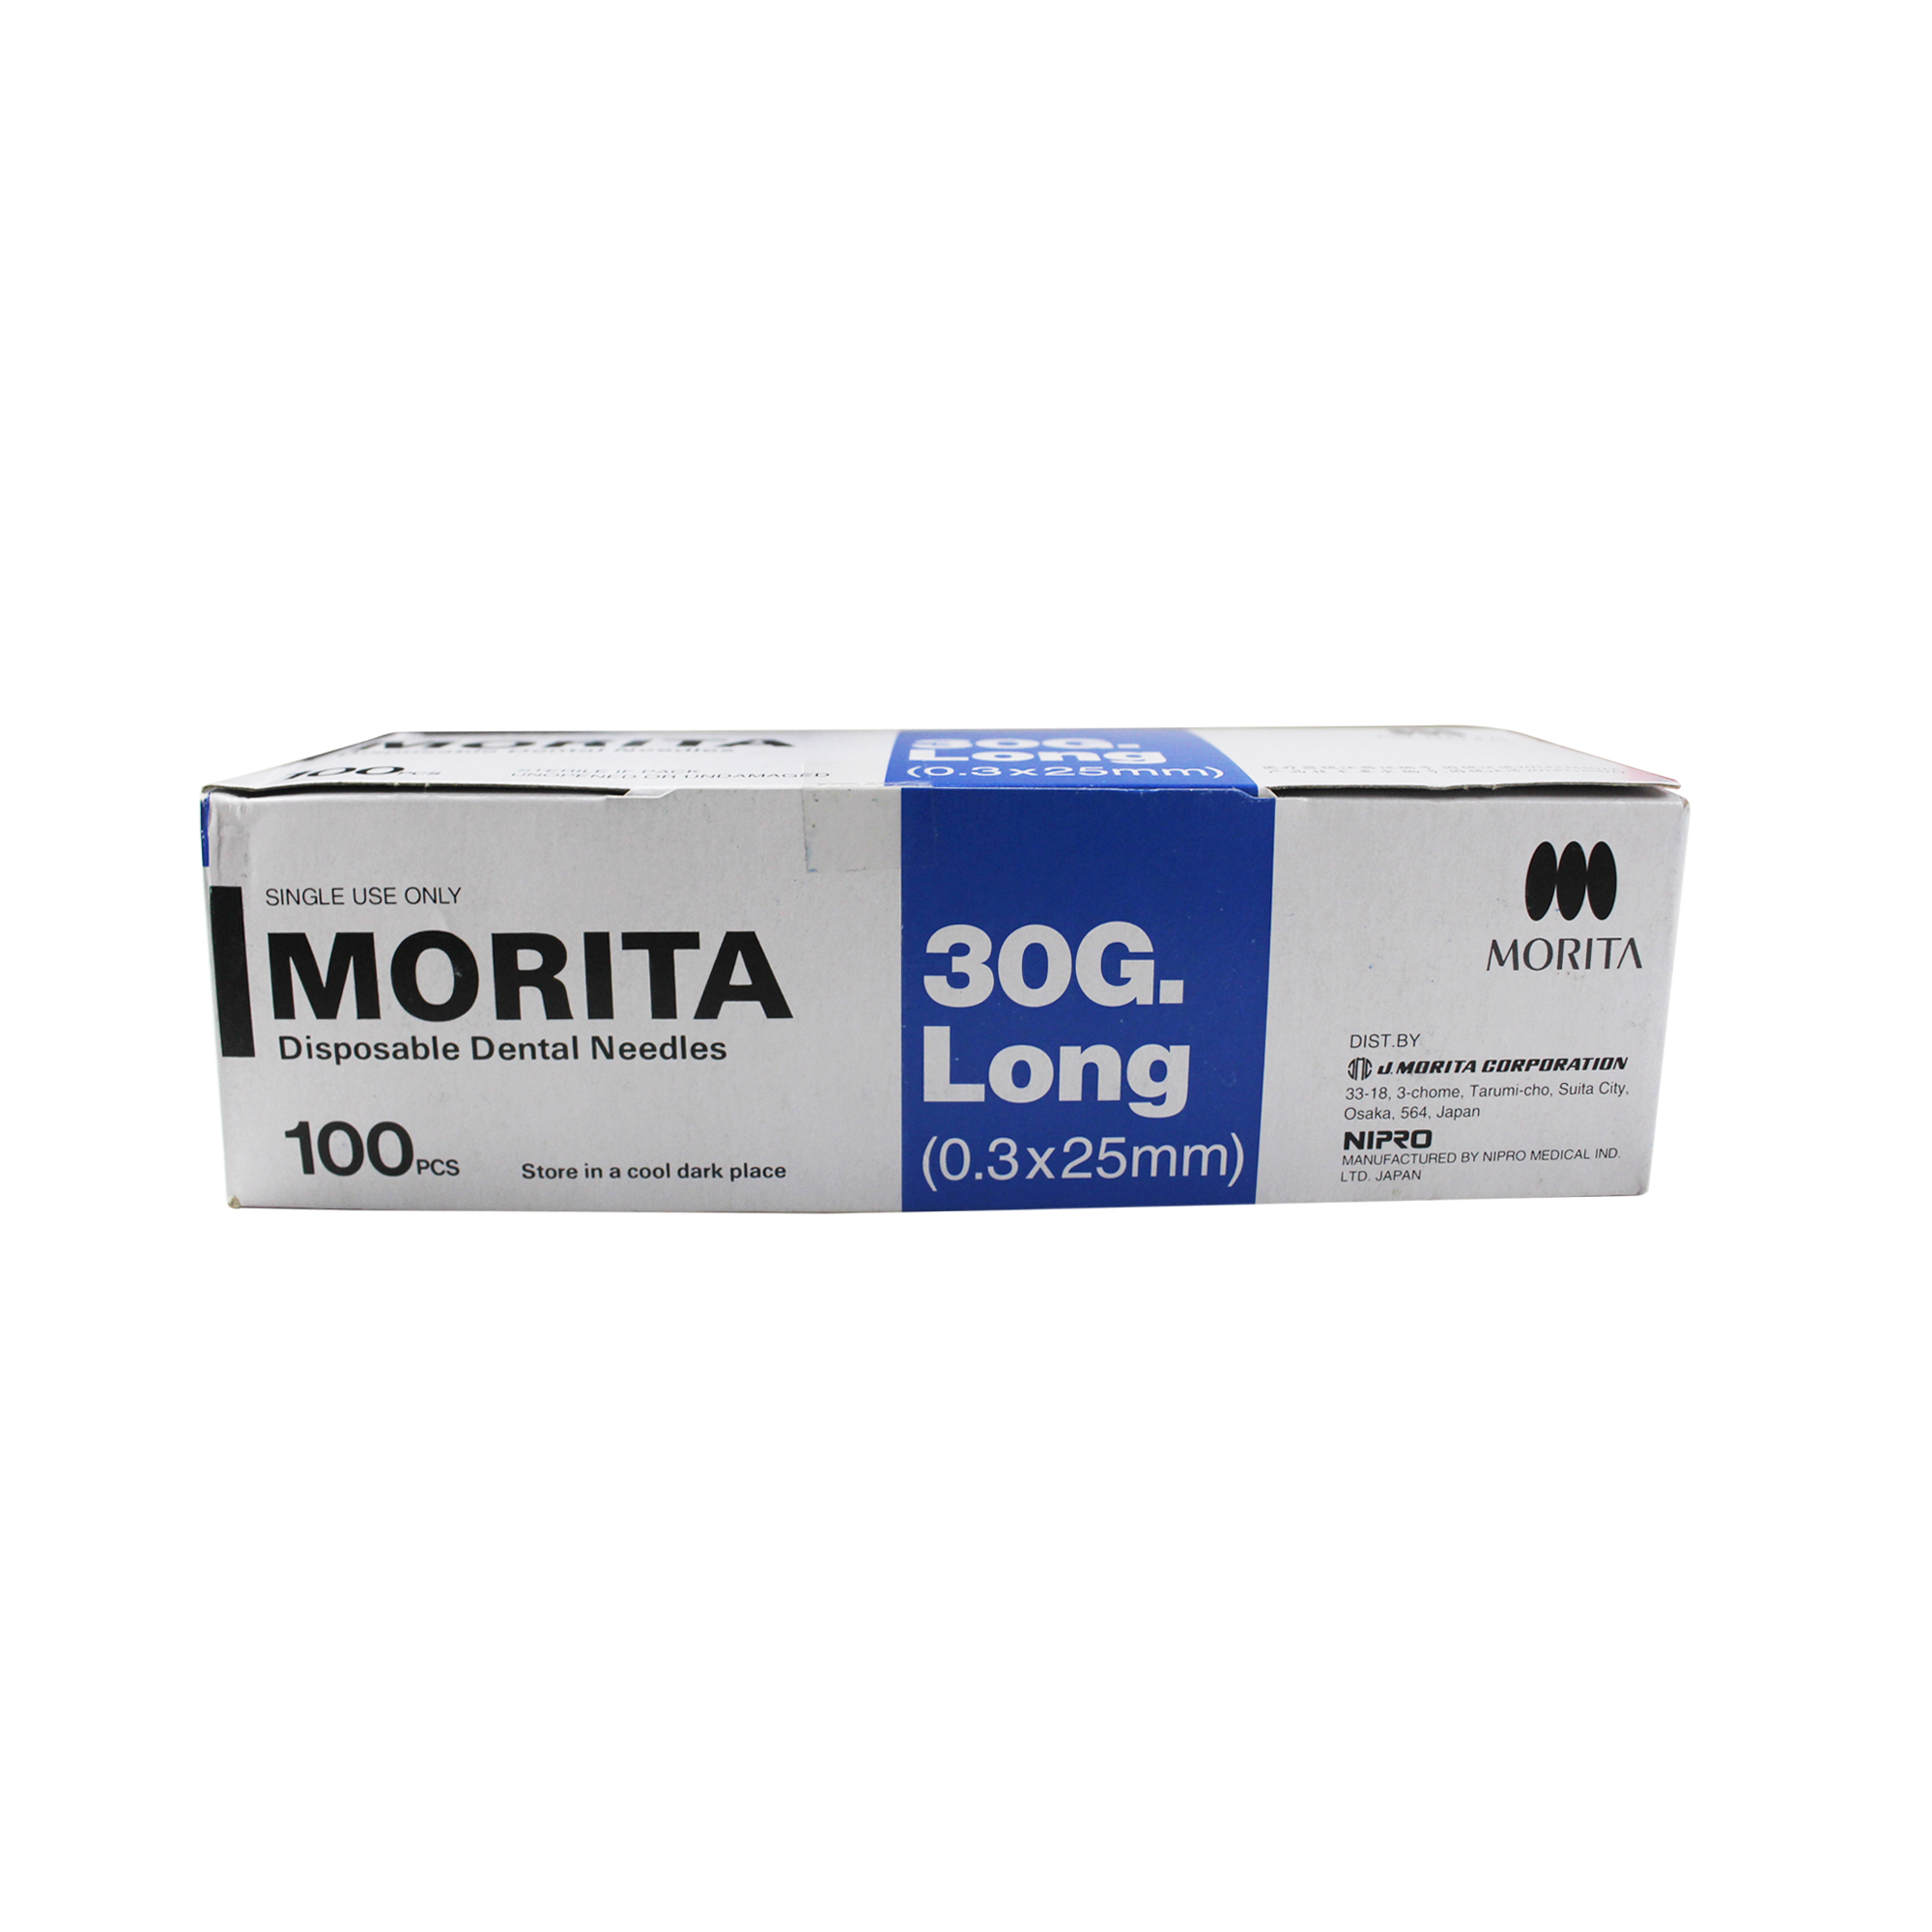 Morita Dental Needles 30g LONG 0.3 x 25mm image 0